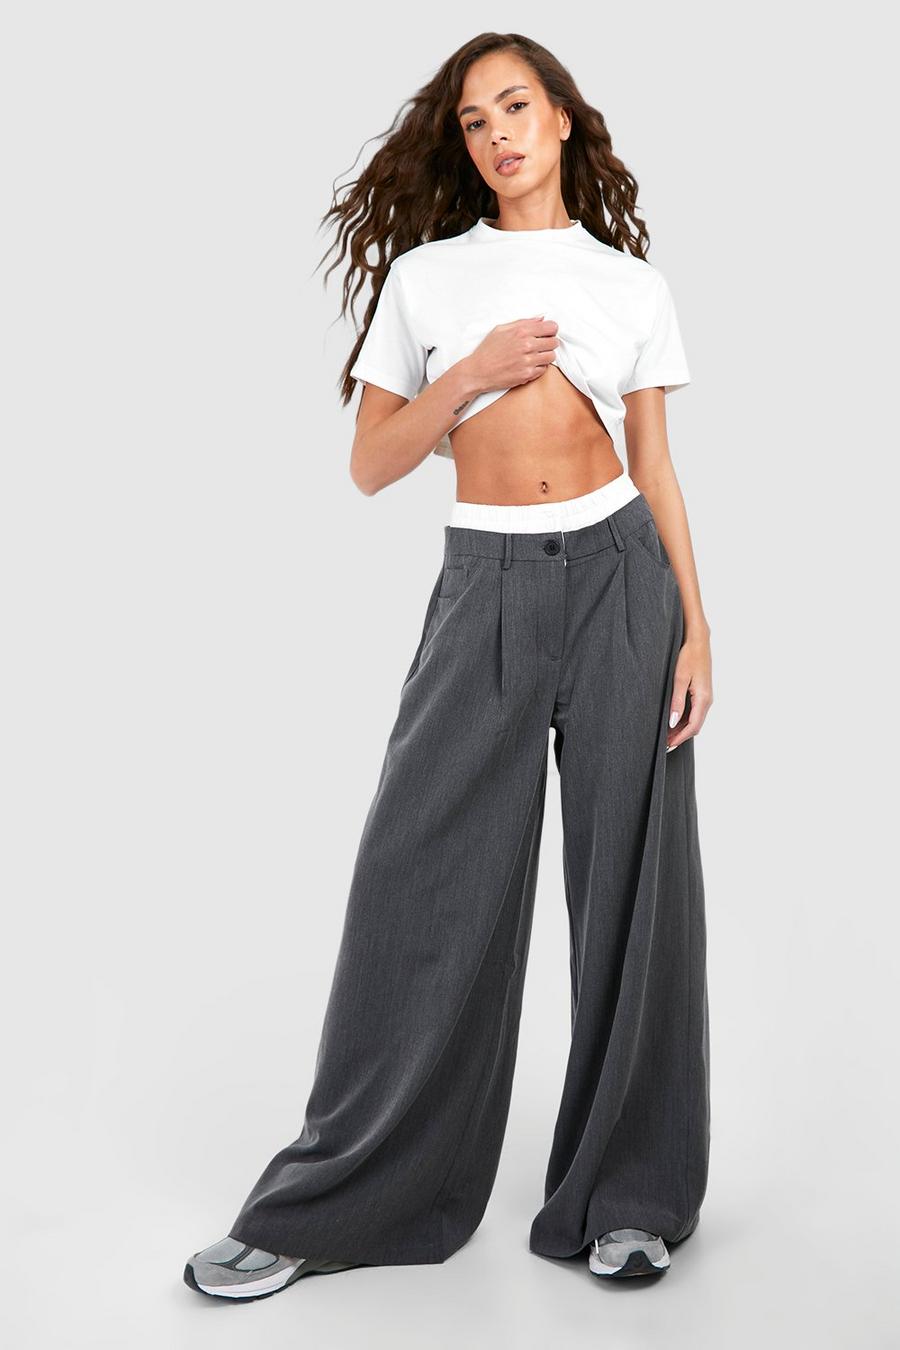 https://media.boohoo.com/i/boohoo/gzz79131_charcoal_xl/female-charcoal-contrast-waistband-detail-wide-leg-trouser-/?w=900&qlt=default&fmt.jp2.qlt=70&fmt=auto&sm=fit